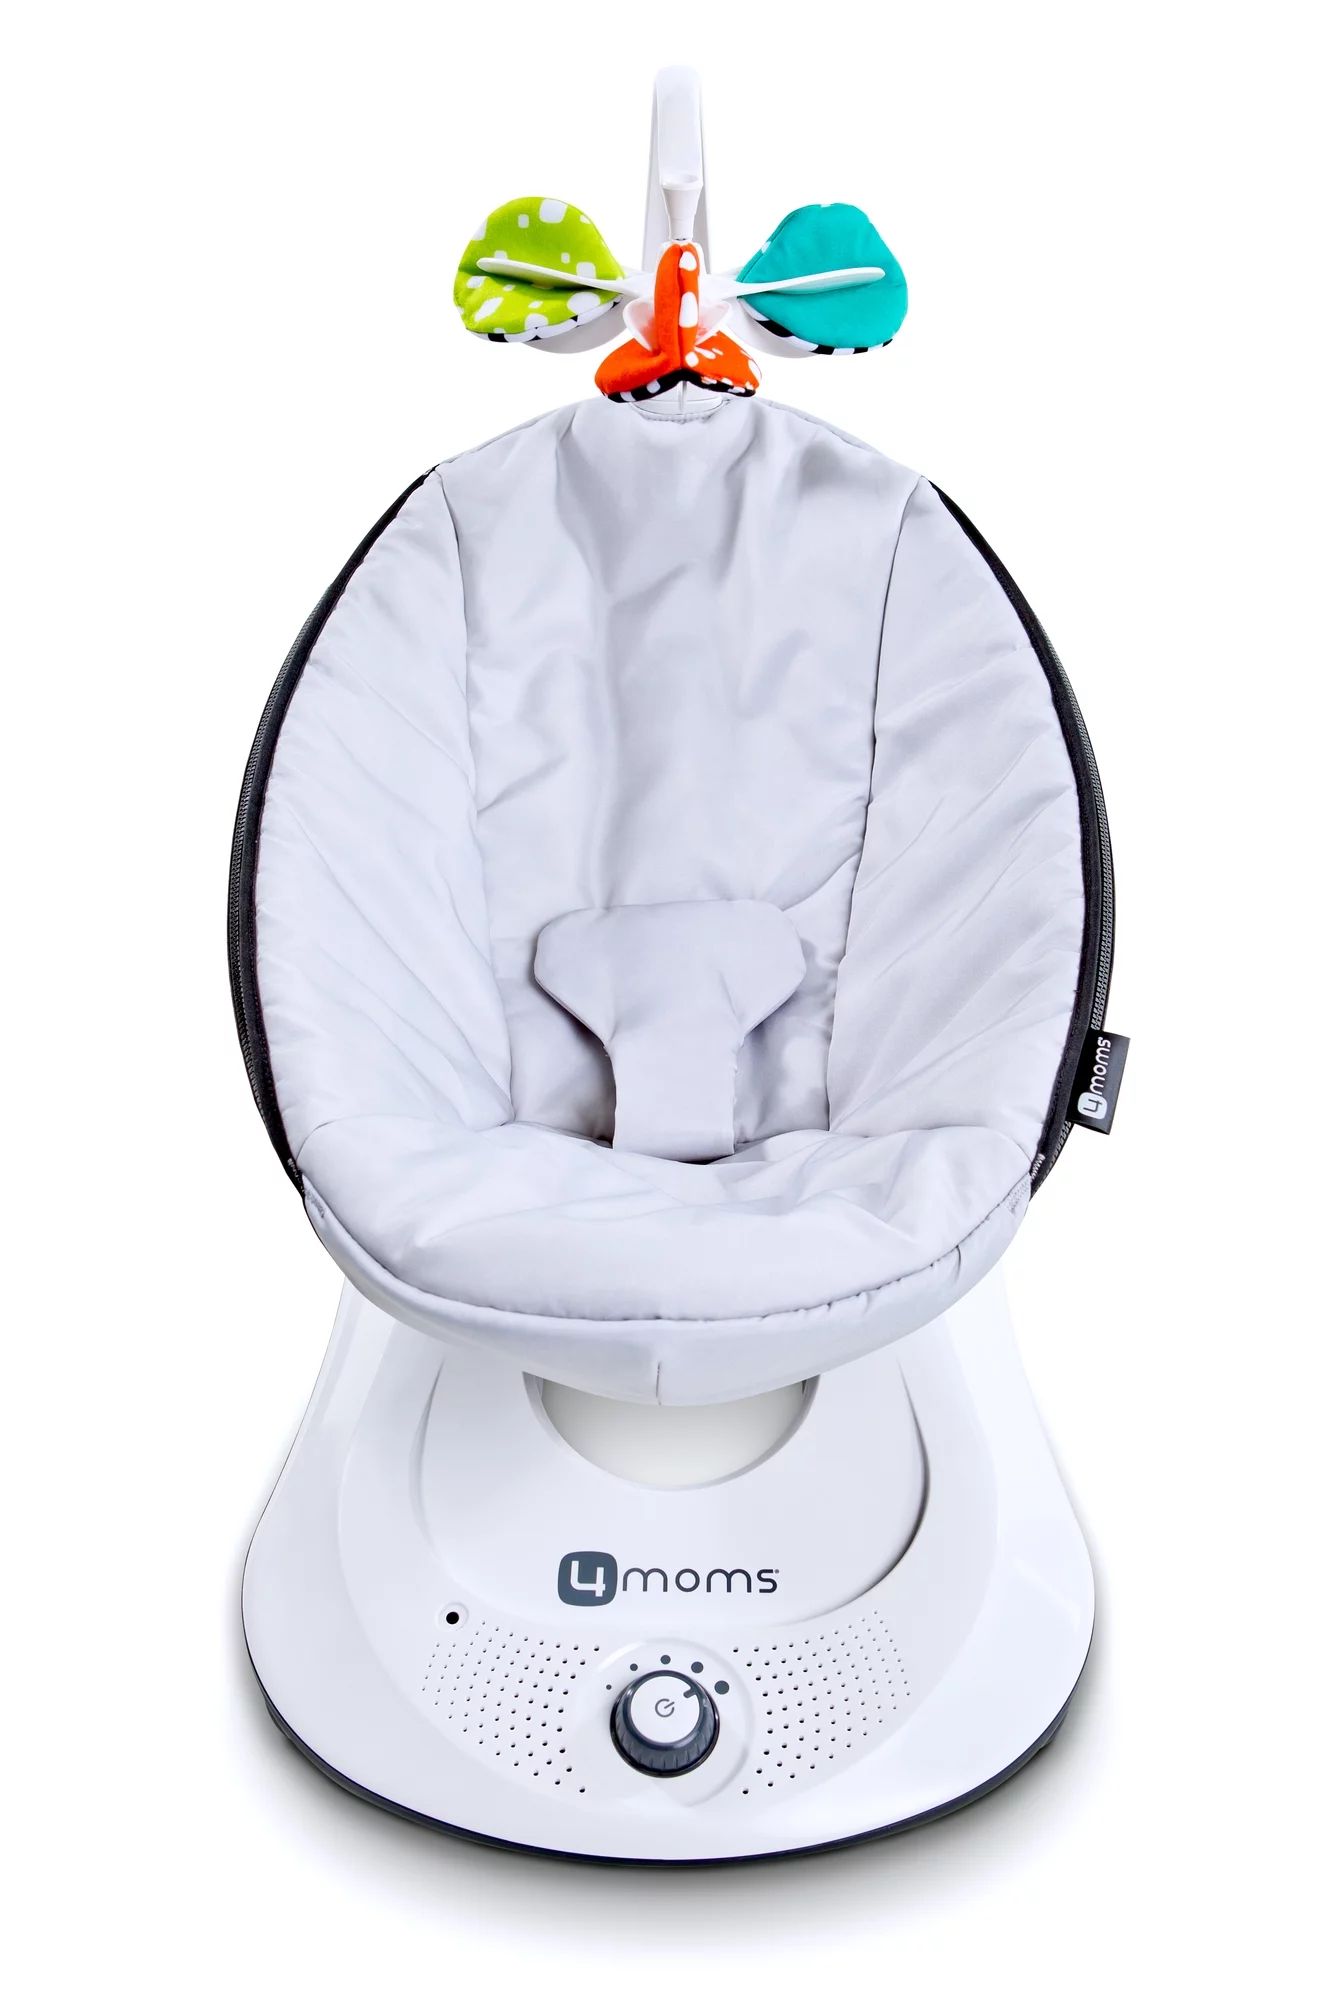 4moms RockaRoo Infant Seat, Compact Baby Swing, Grey Classic | Walmart (US)